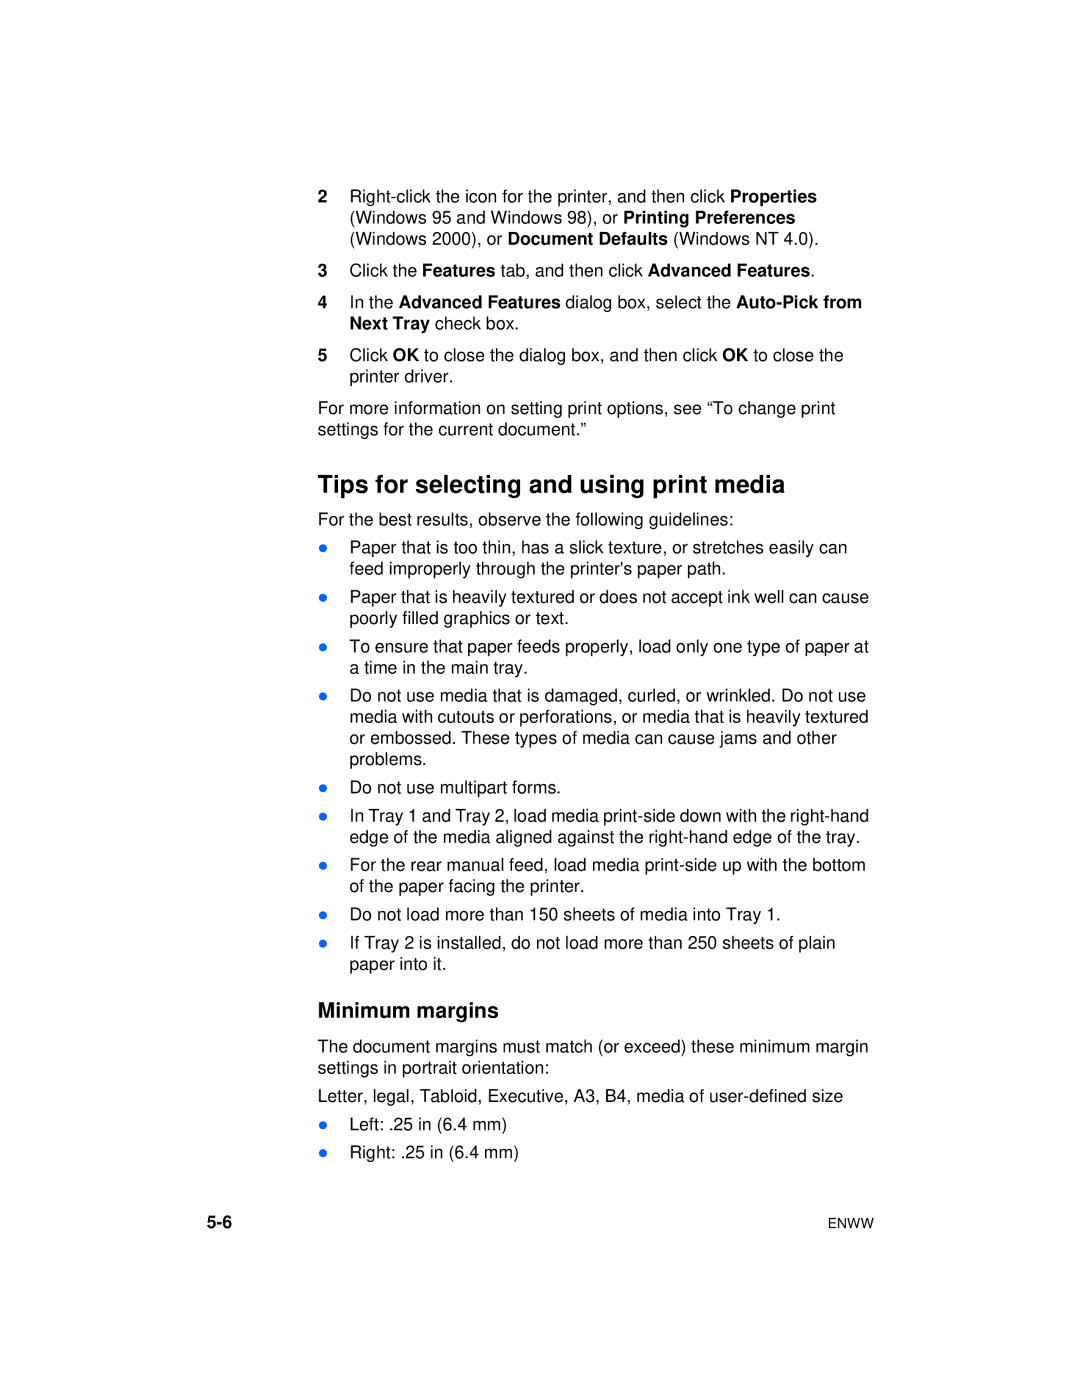 HP Color Inkjet cp1700 manual Tips for selecting and using print media, Minimum margins 